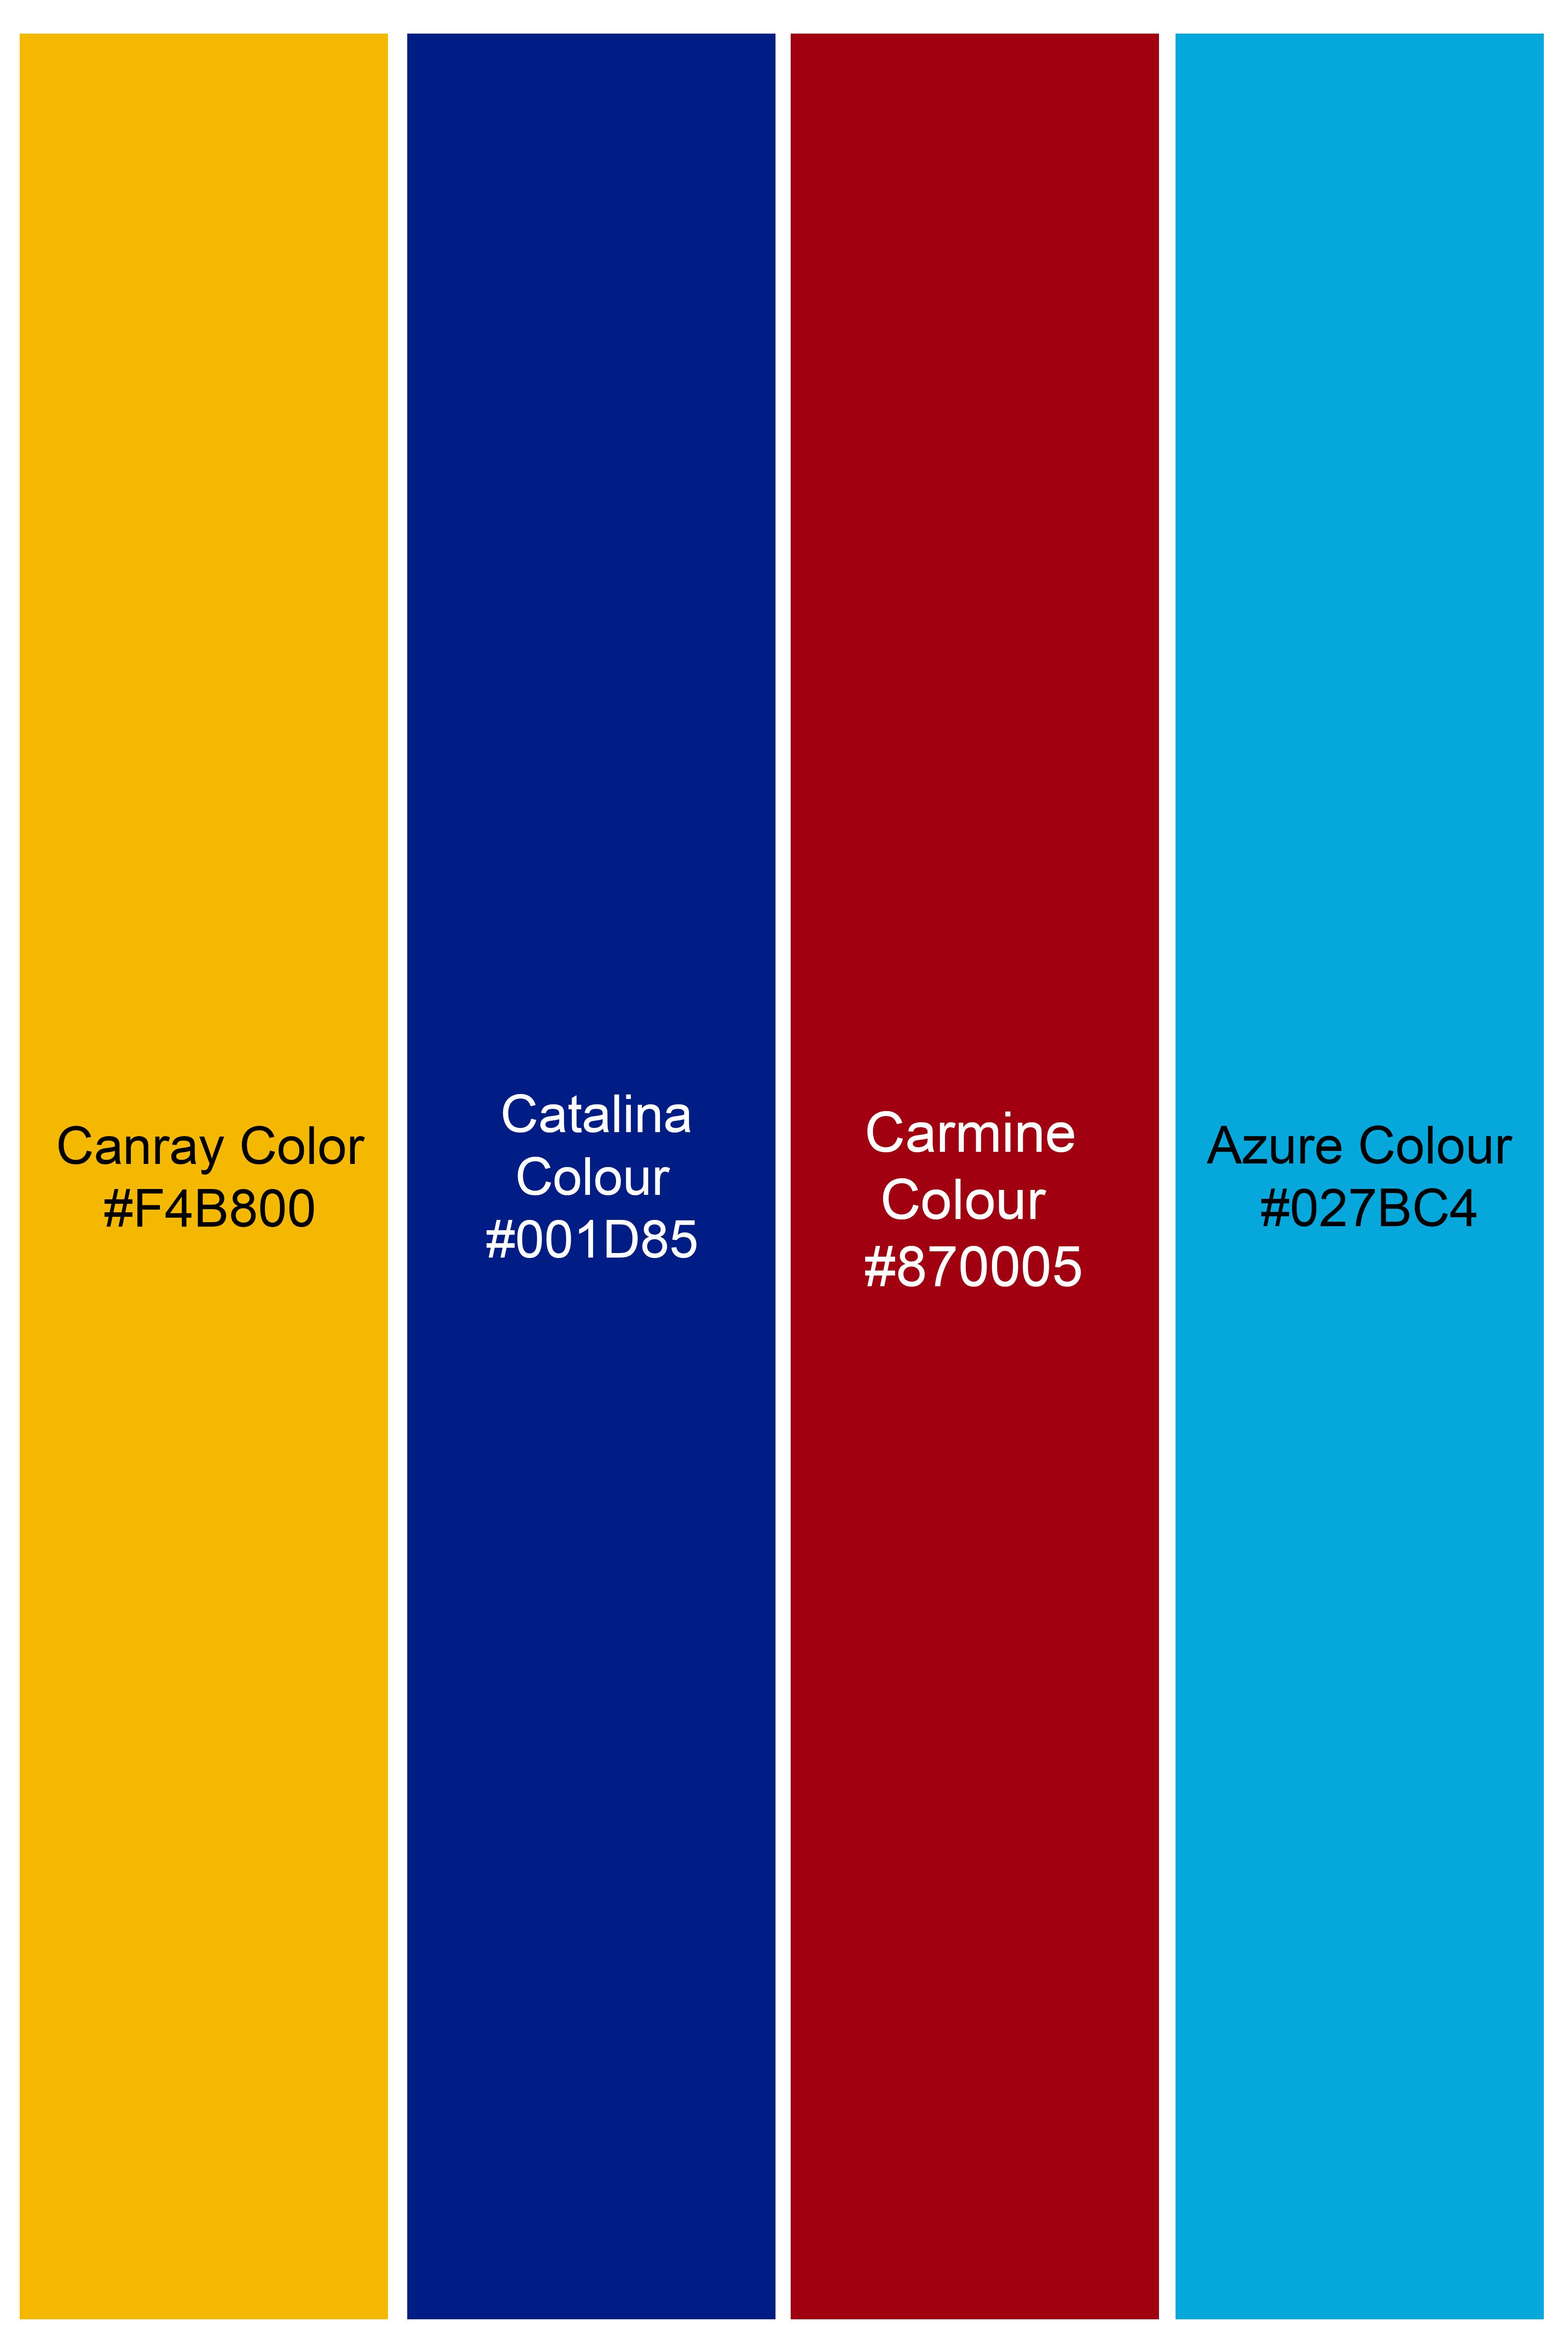 Canray Orange and Catalina Blue Multicolour Cotton Thread Embroidered Bandhgala Designer Blazer BL2888-BG-36, BL2888-BG-38, BL2888-BG-40, BL2888-BG-42, BL2888-BG-44, BL2888-BG-46, BL2888-BG-48, BL2888-BG-50, BL2888-BG-88, BL2888-BG-54, BL2888-BG-56, BL2888-BG-58, BL2888-BG-60